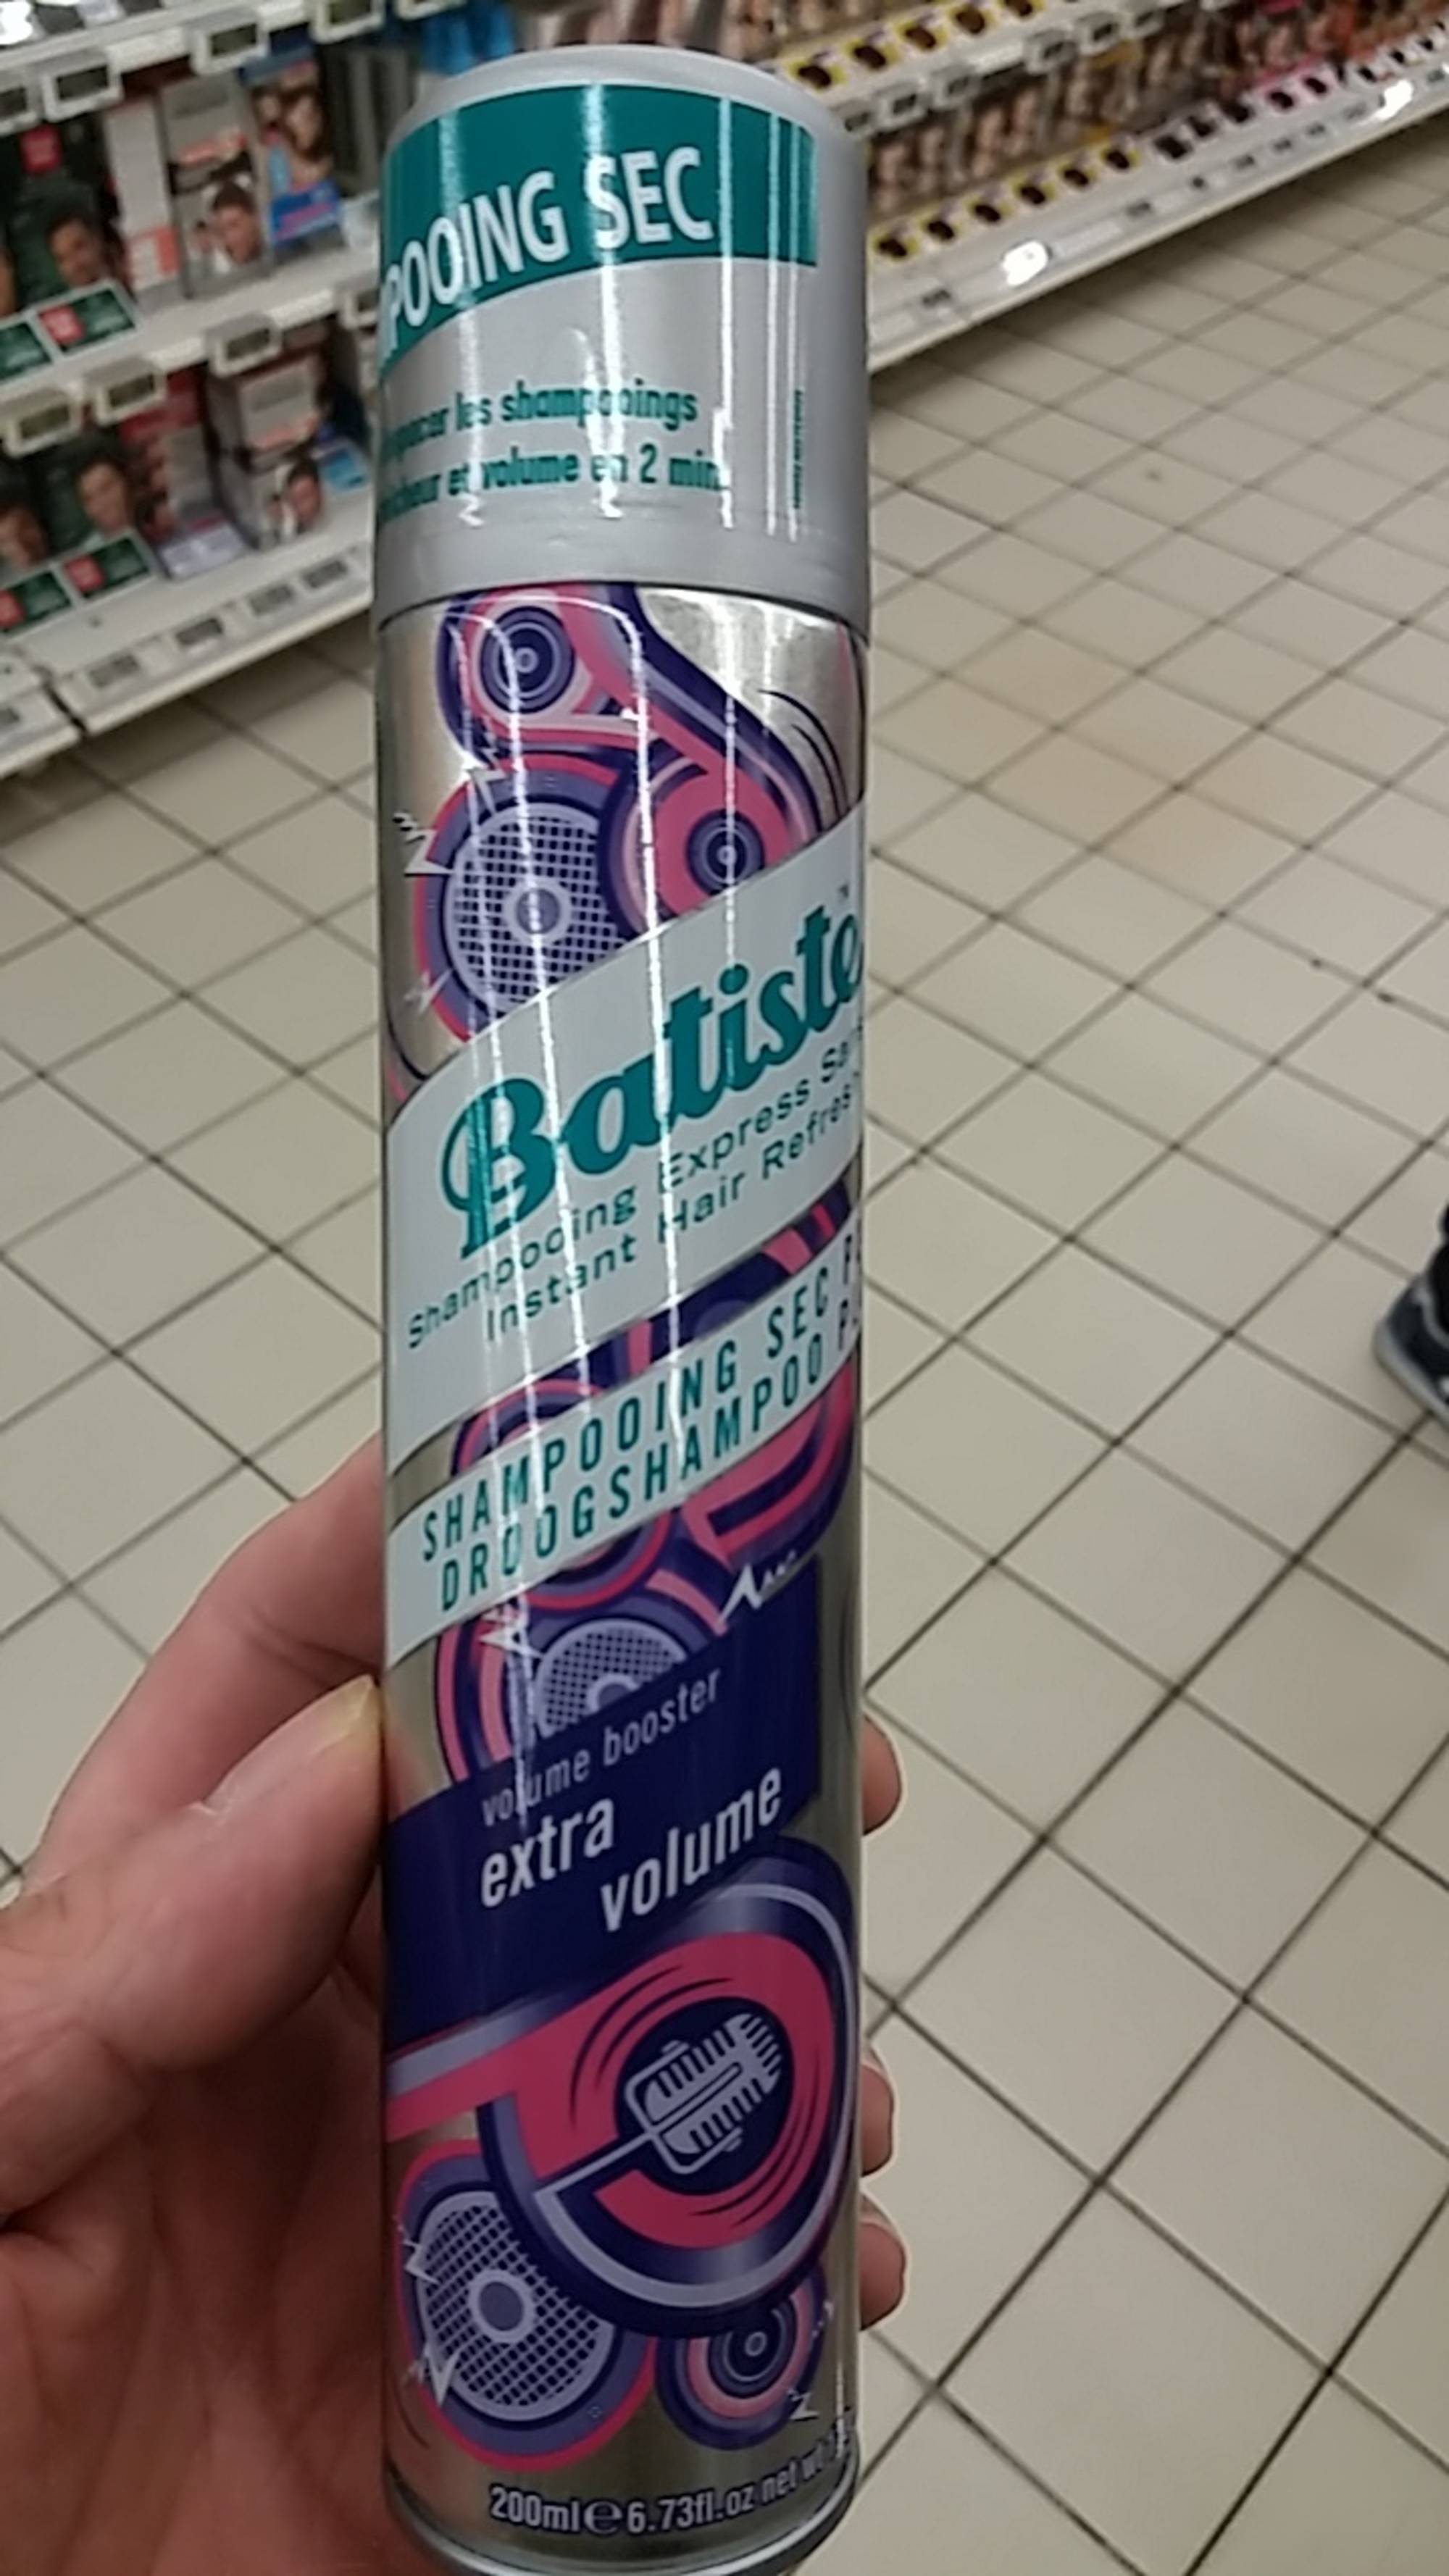 BATISTE - Extra volume - Shampooing sec plus